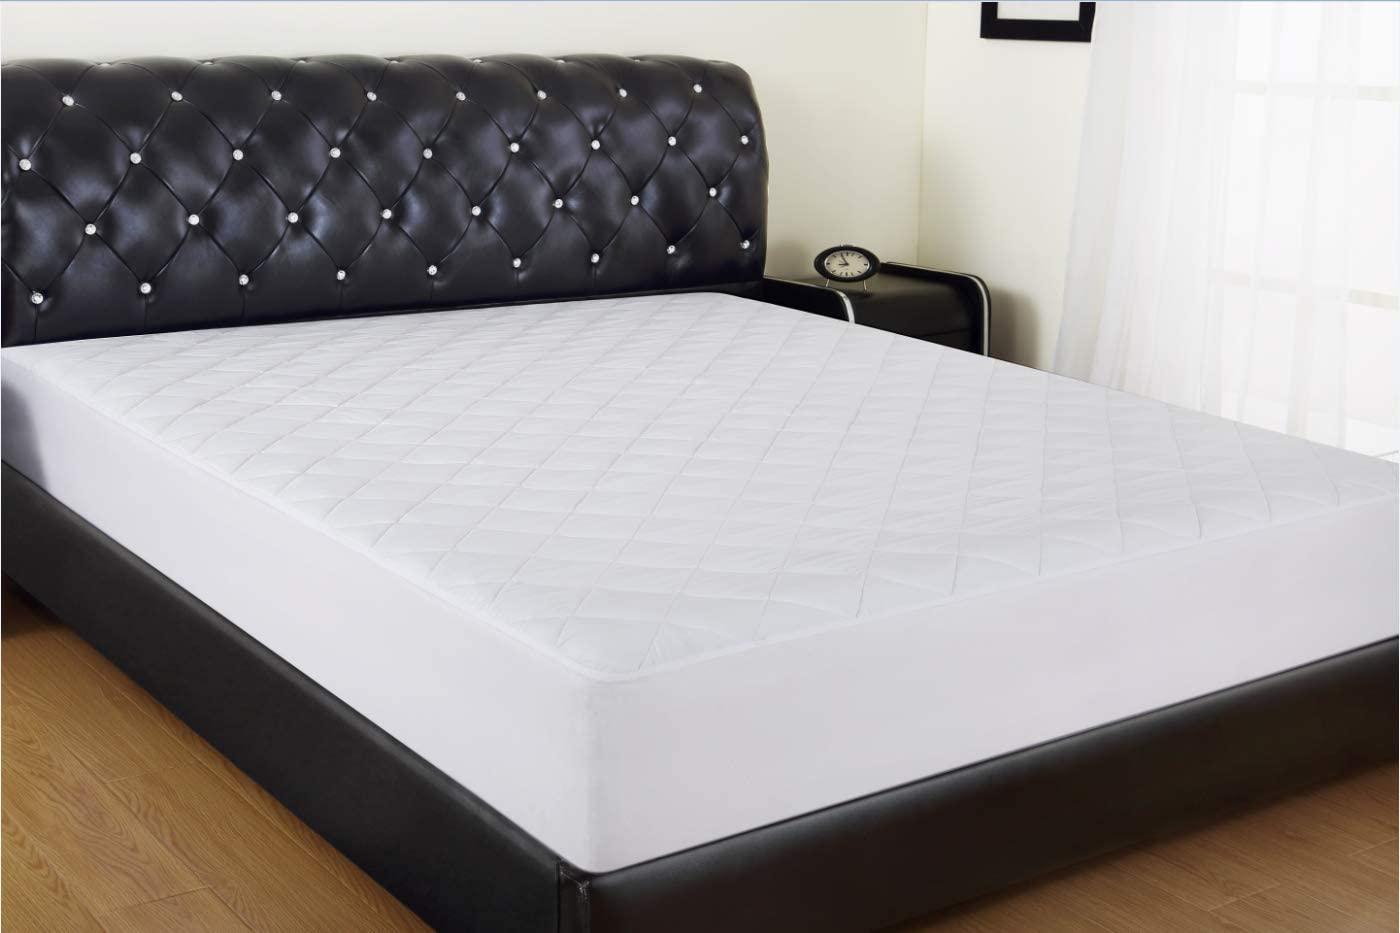 A Mattress cover vs. a mattress pad is designed to protect a mattress